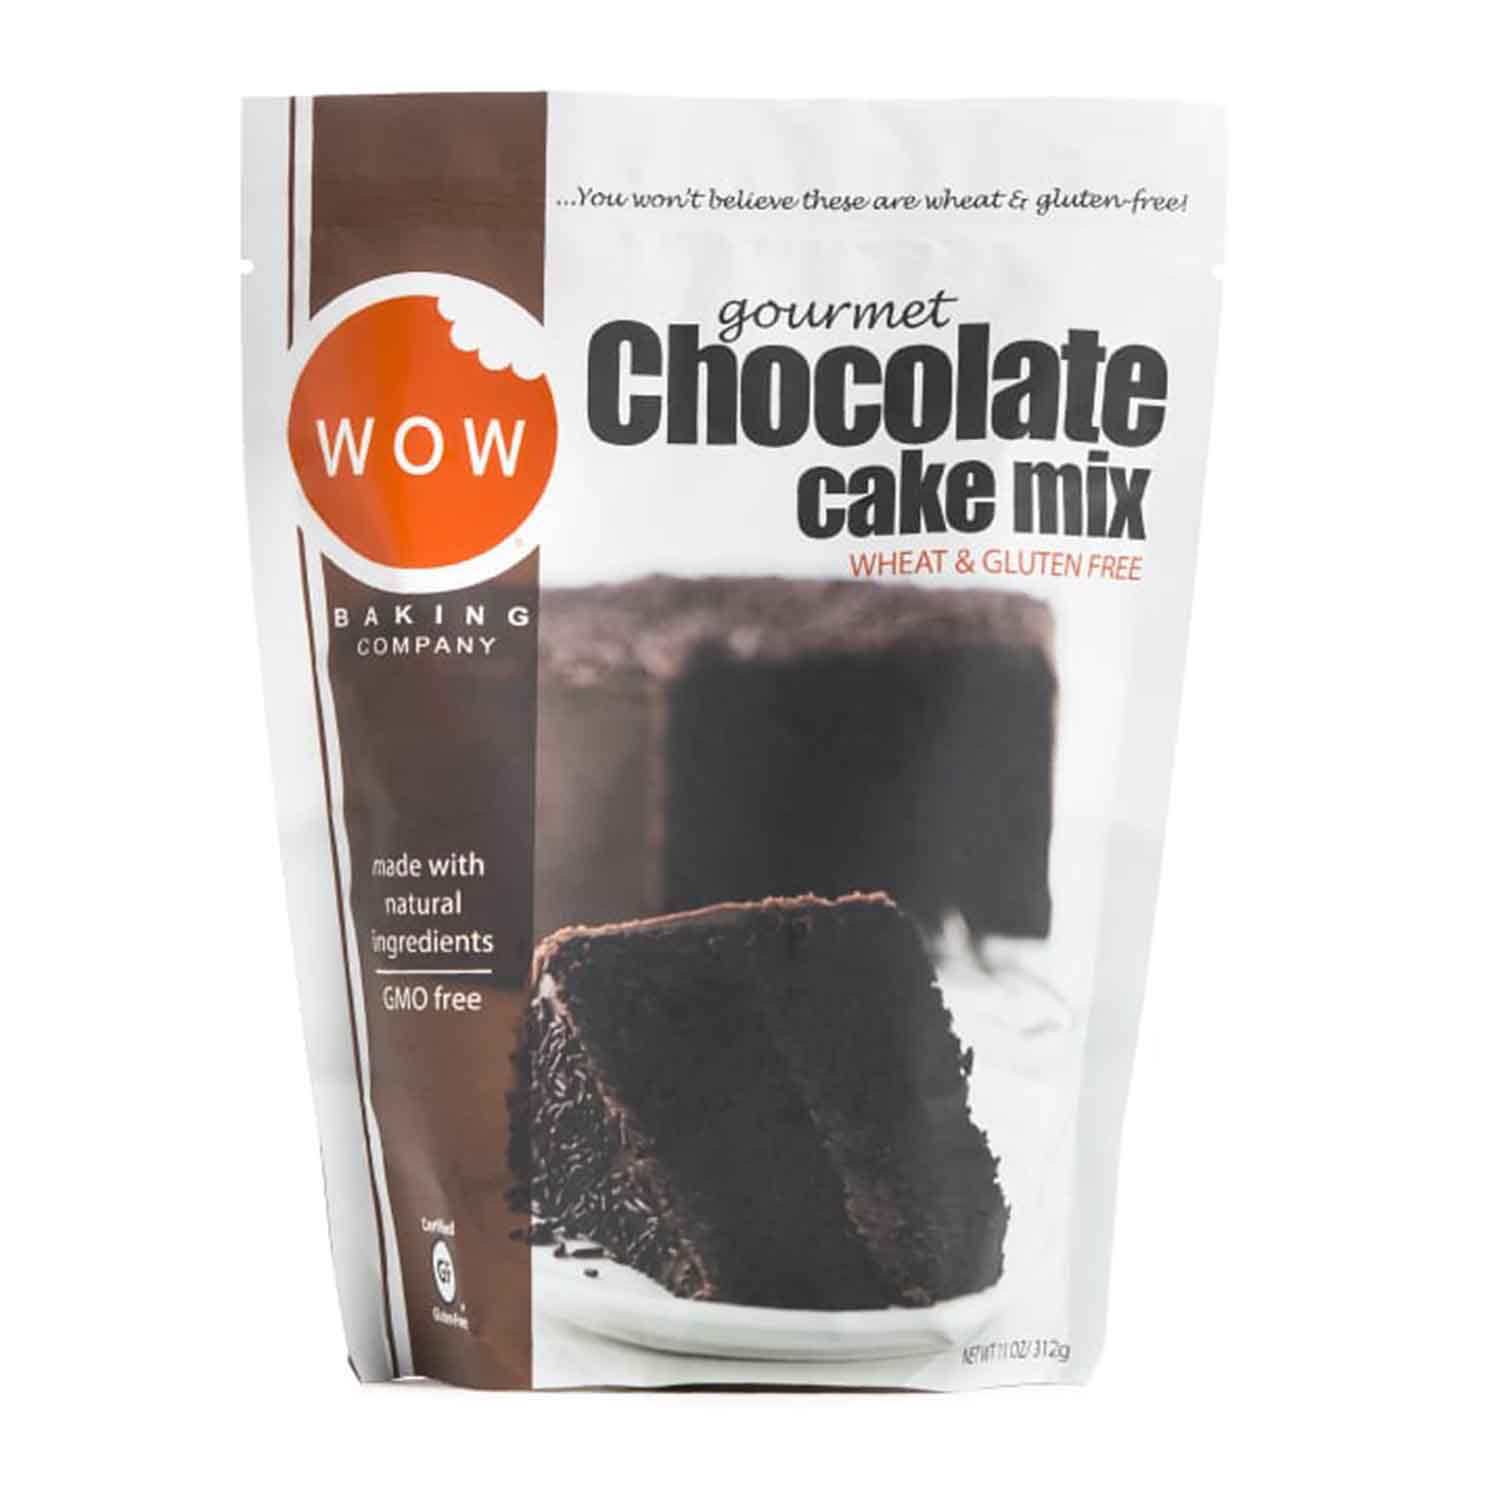 Gluten-Free Chocolate Cake Mix